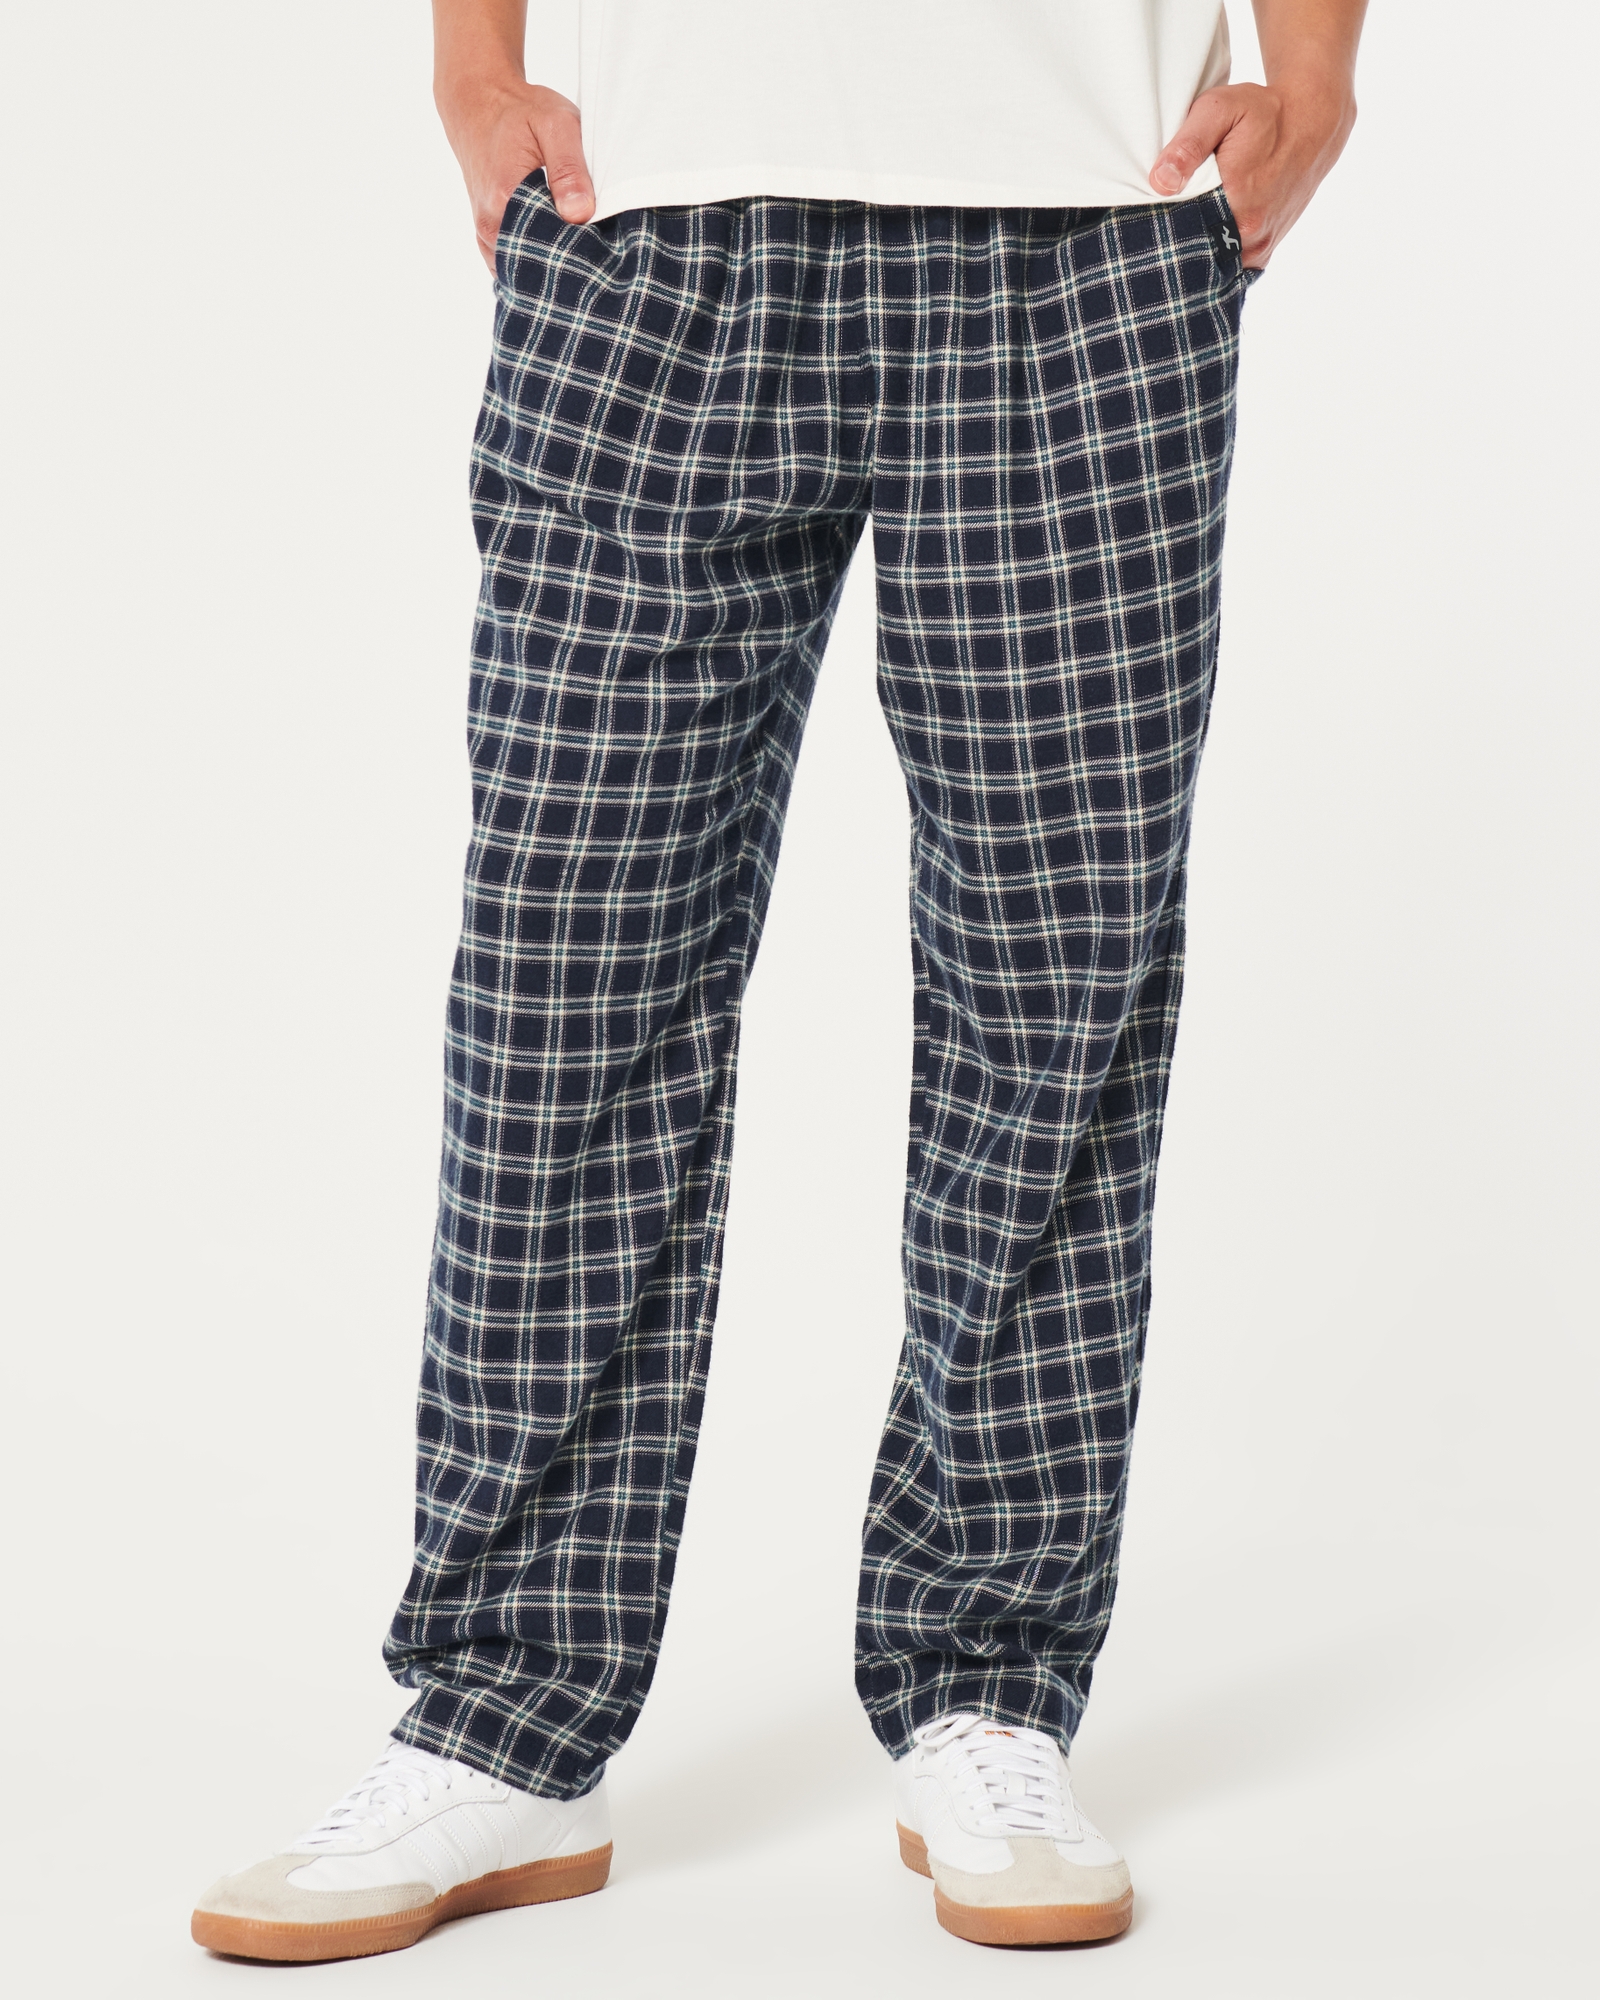 Lucky Brand Men's Sleepwear Pajamas Lounge Pants Size XL Black & White  Plaid